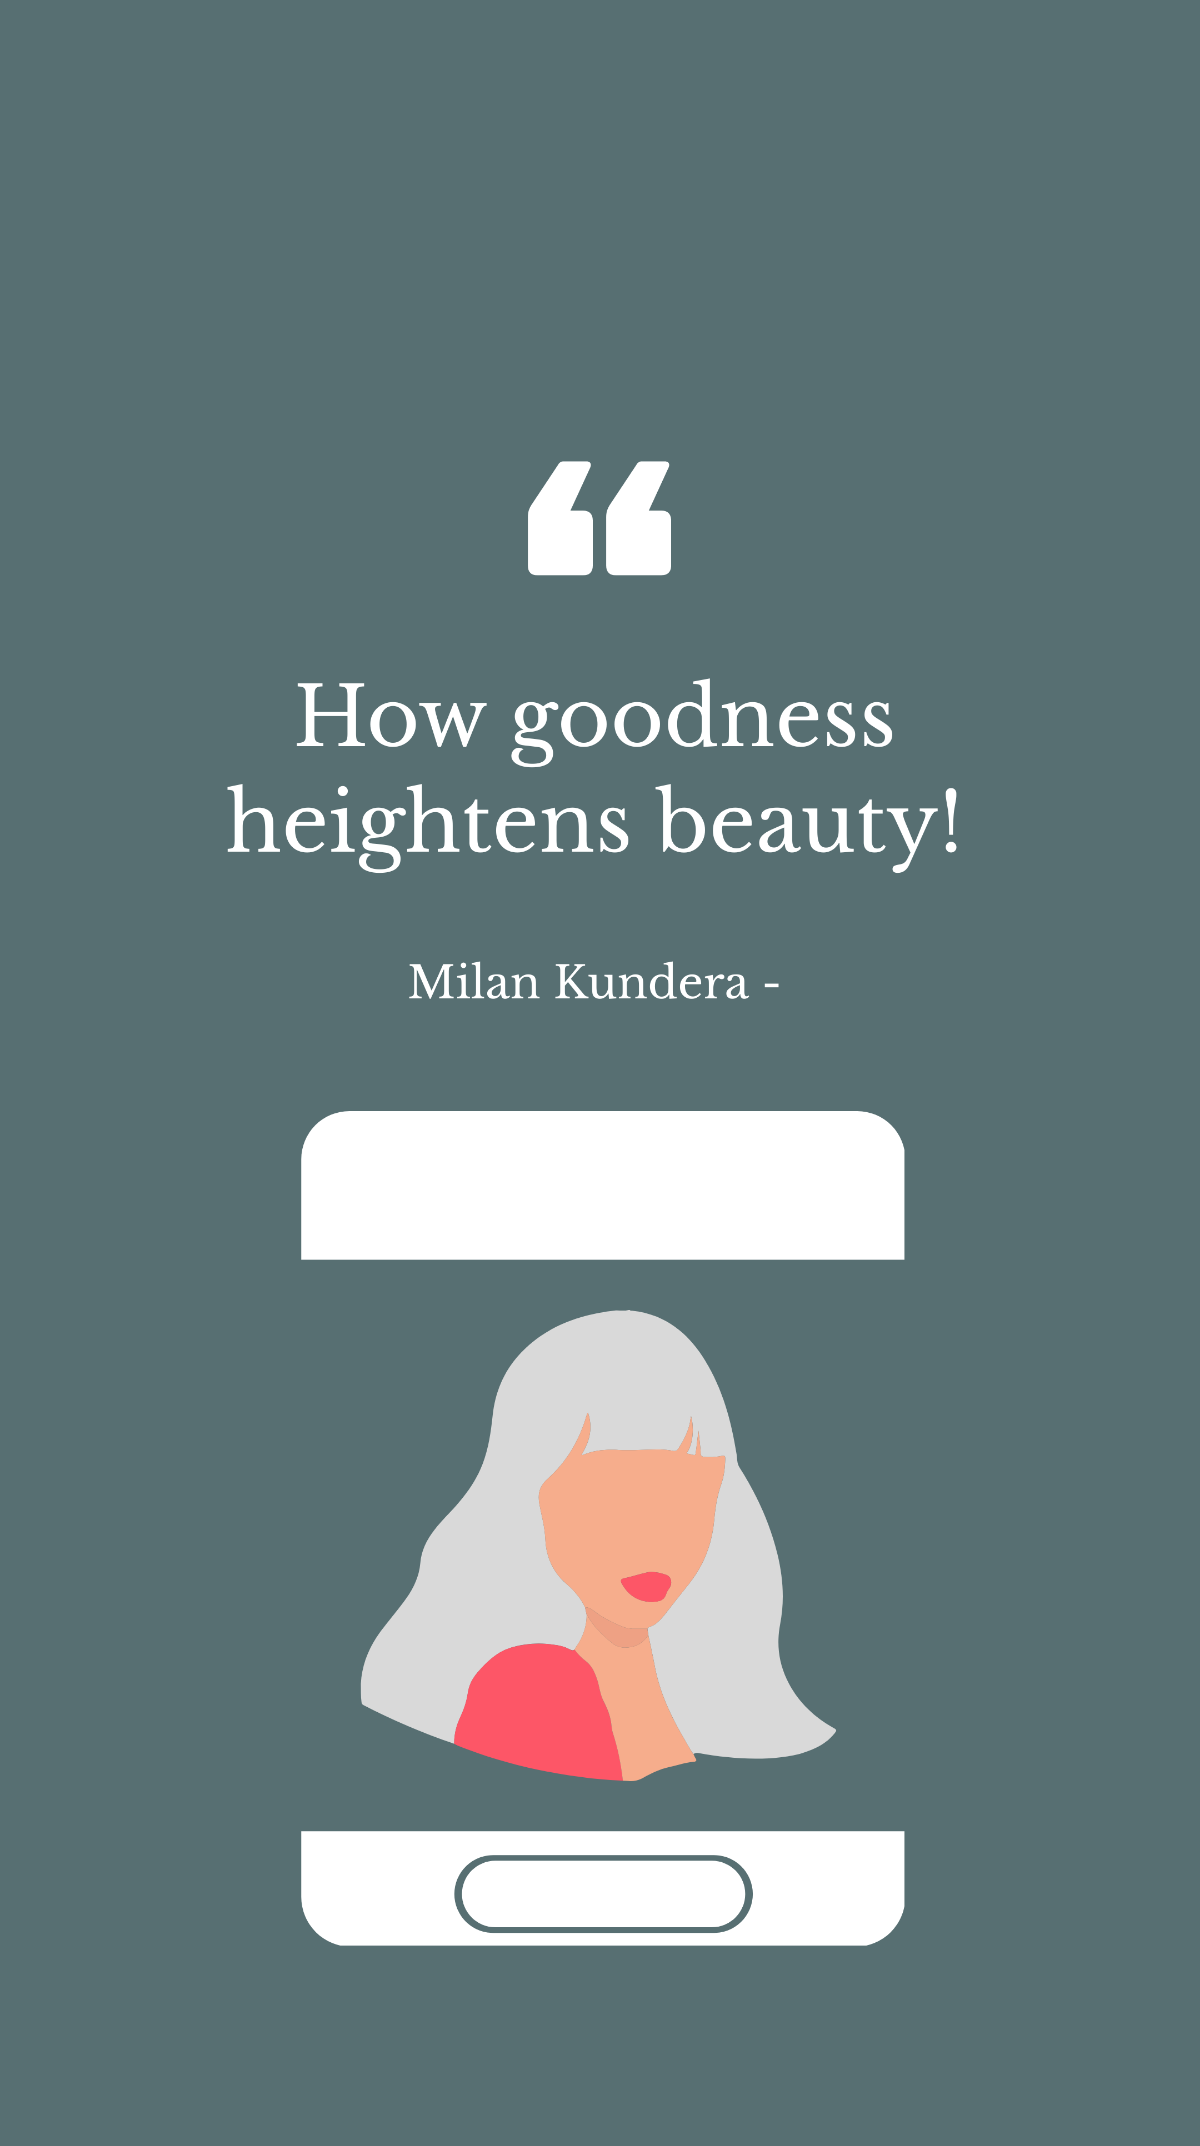 Milan Kundera - How goodness heightens beauty! Template